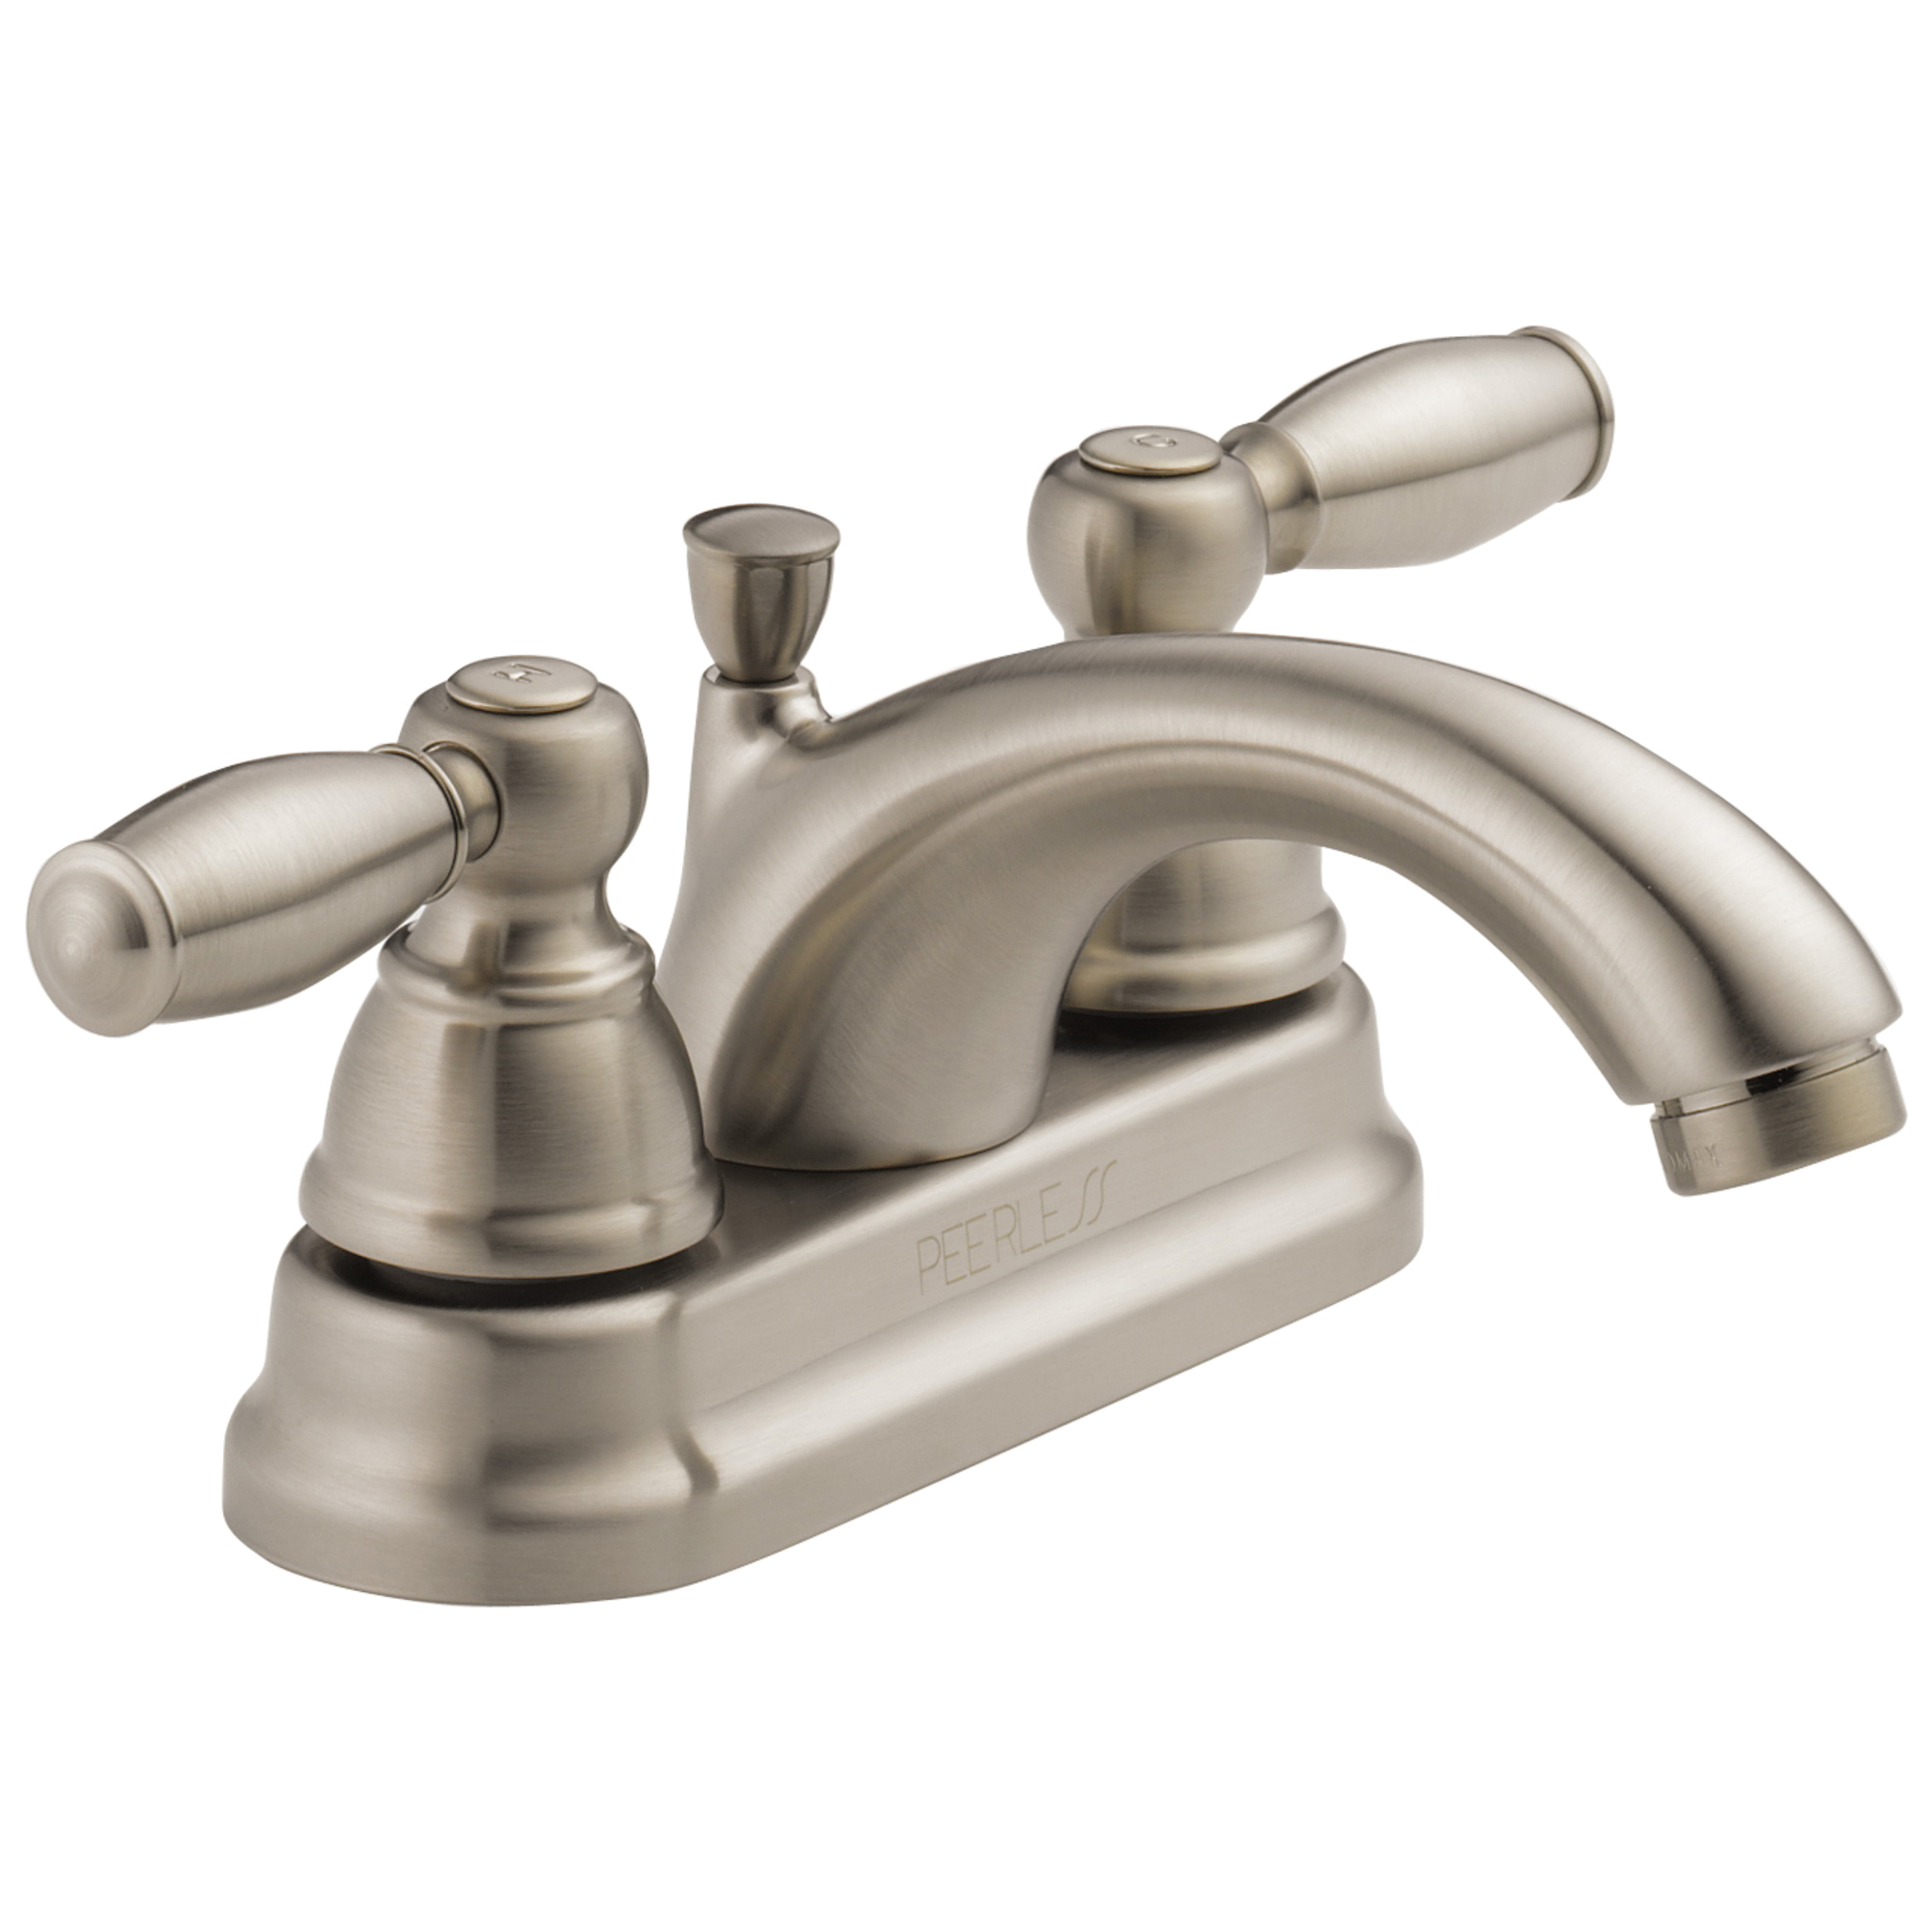 Peerless® P299675LF-BN Centerset Lavatory Faucet, Brushed Nickel, 2 Handles, Pop-Up Drain, 1.2 gpm